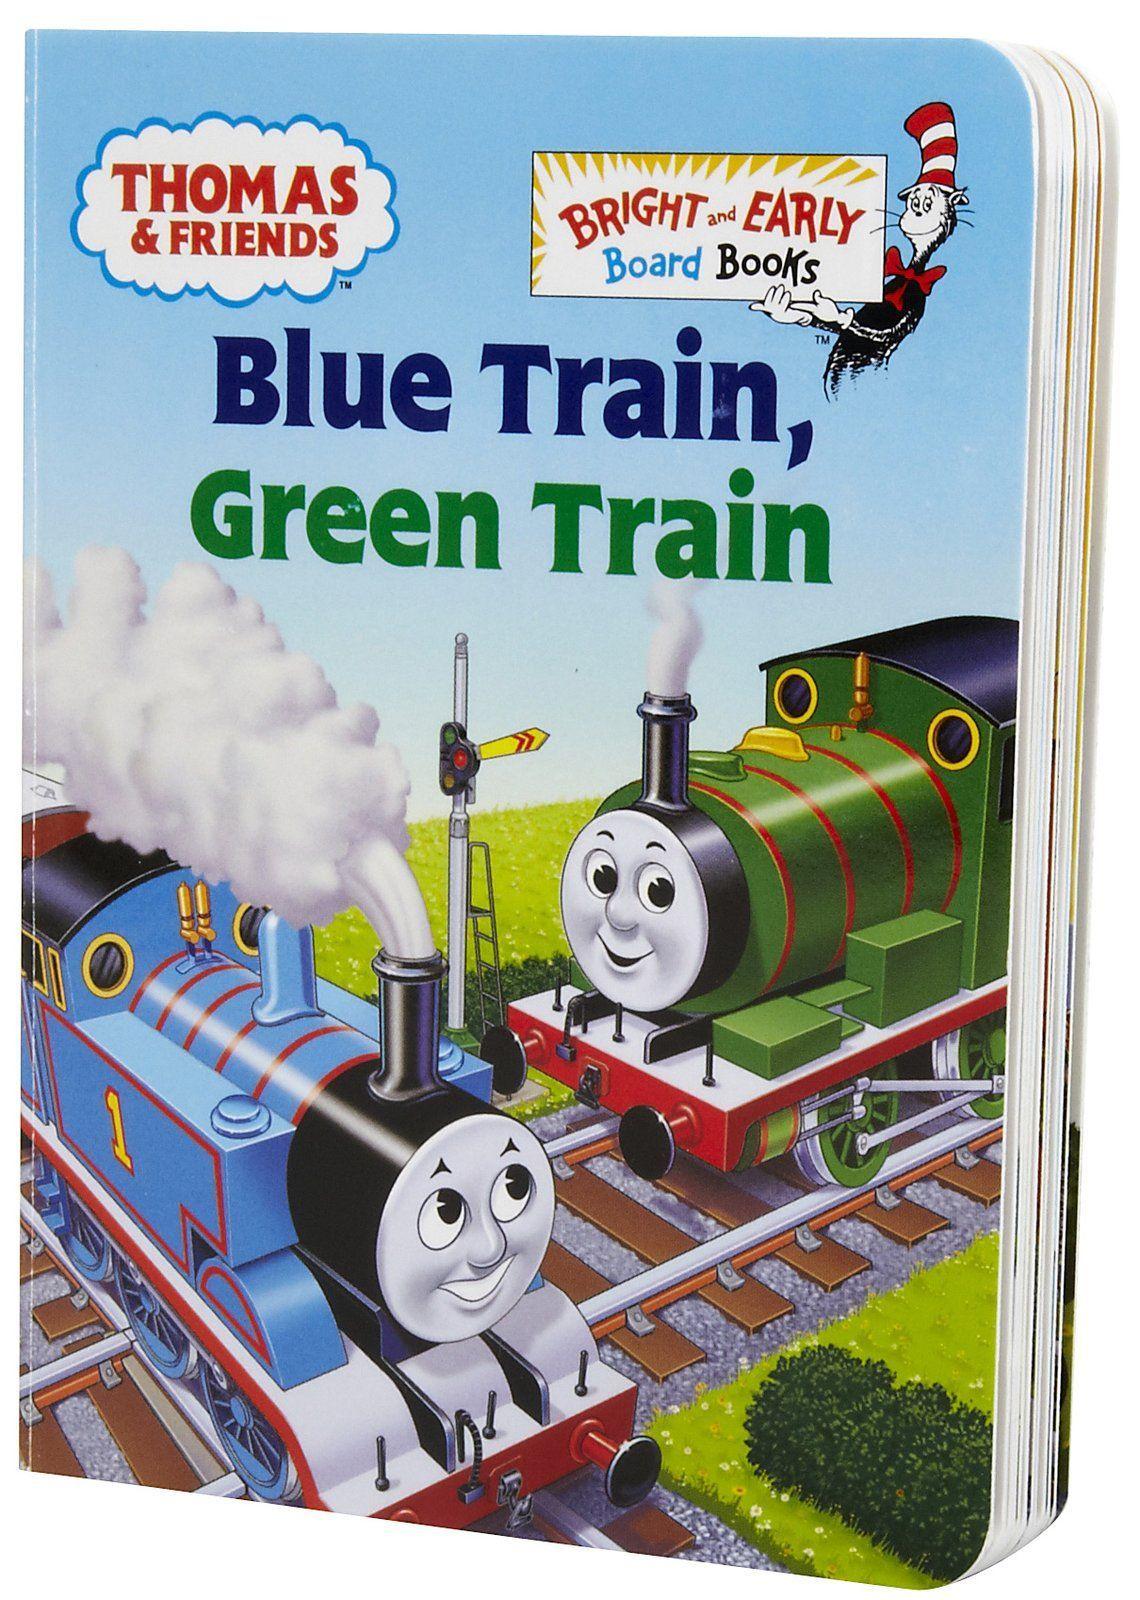 Blue and Green Train Logo - Thomas & Friends Train, Green Train Shipping. If I